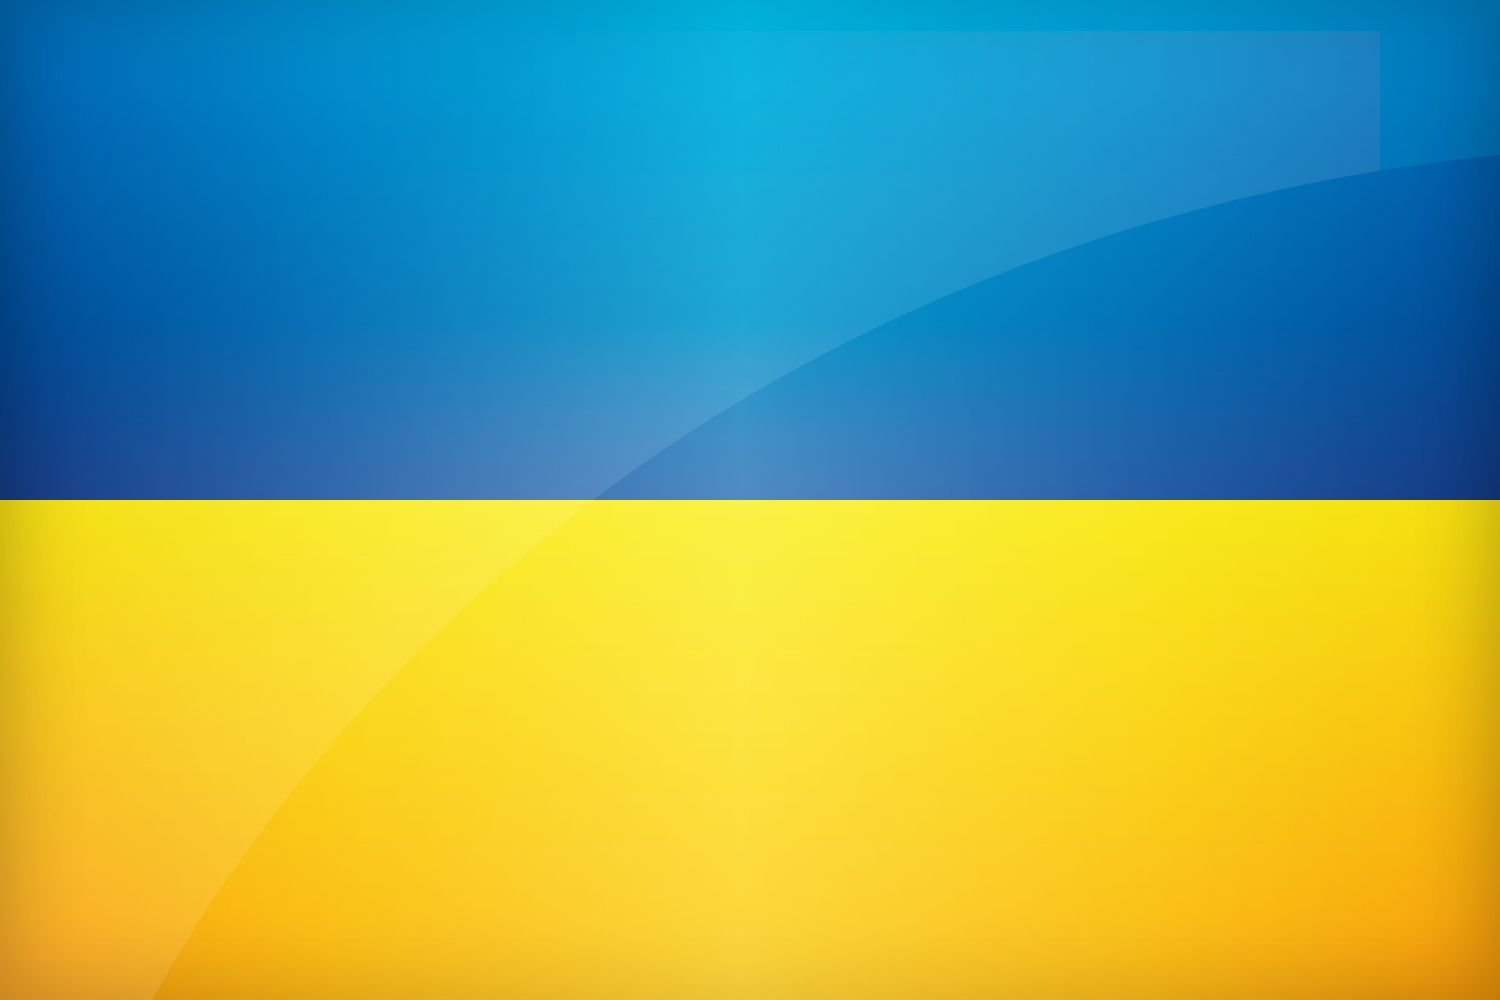 Amazing Flag Of Ukraine Pictures & Backgrounds